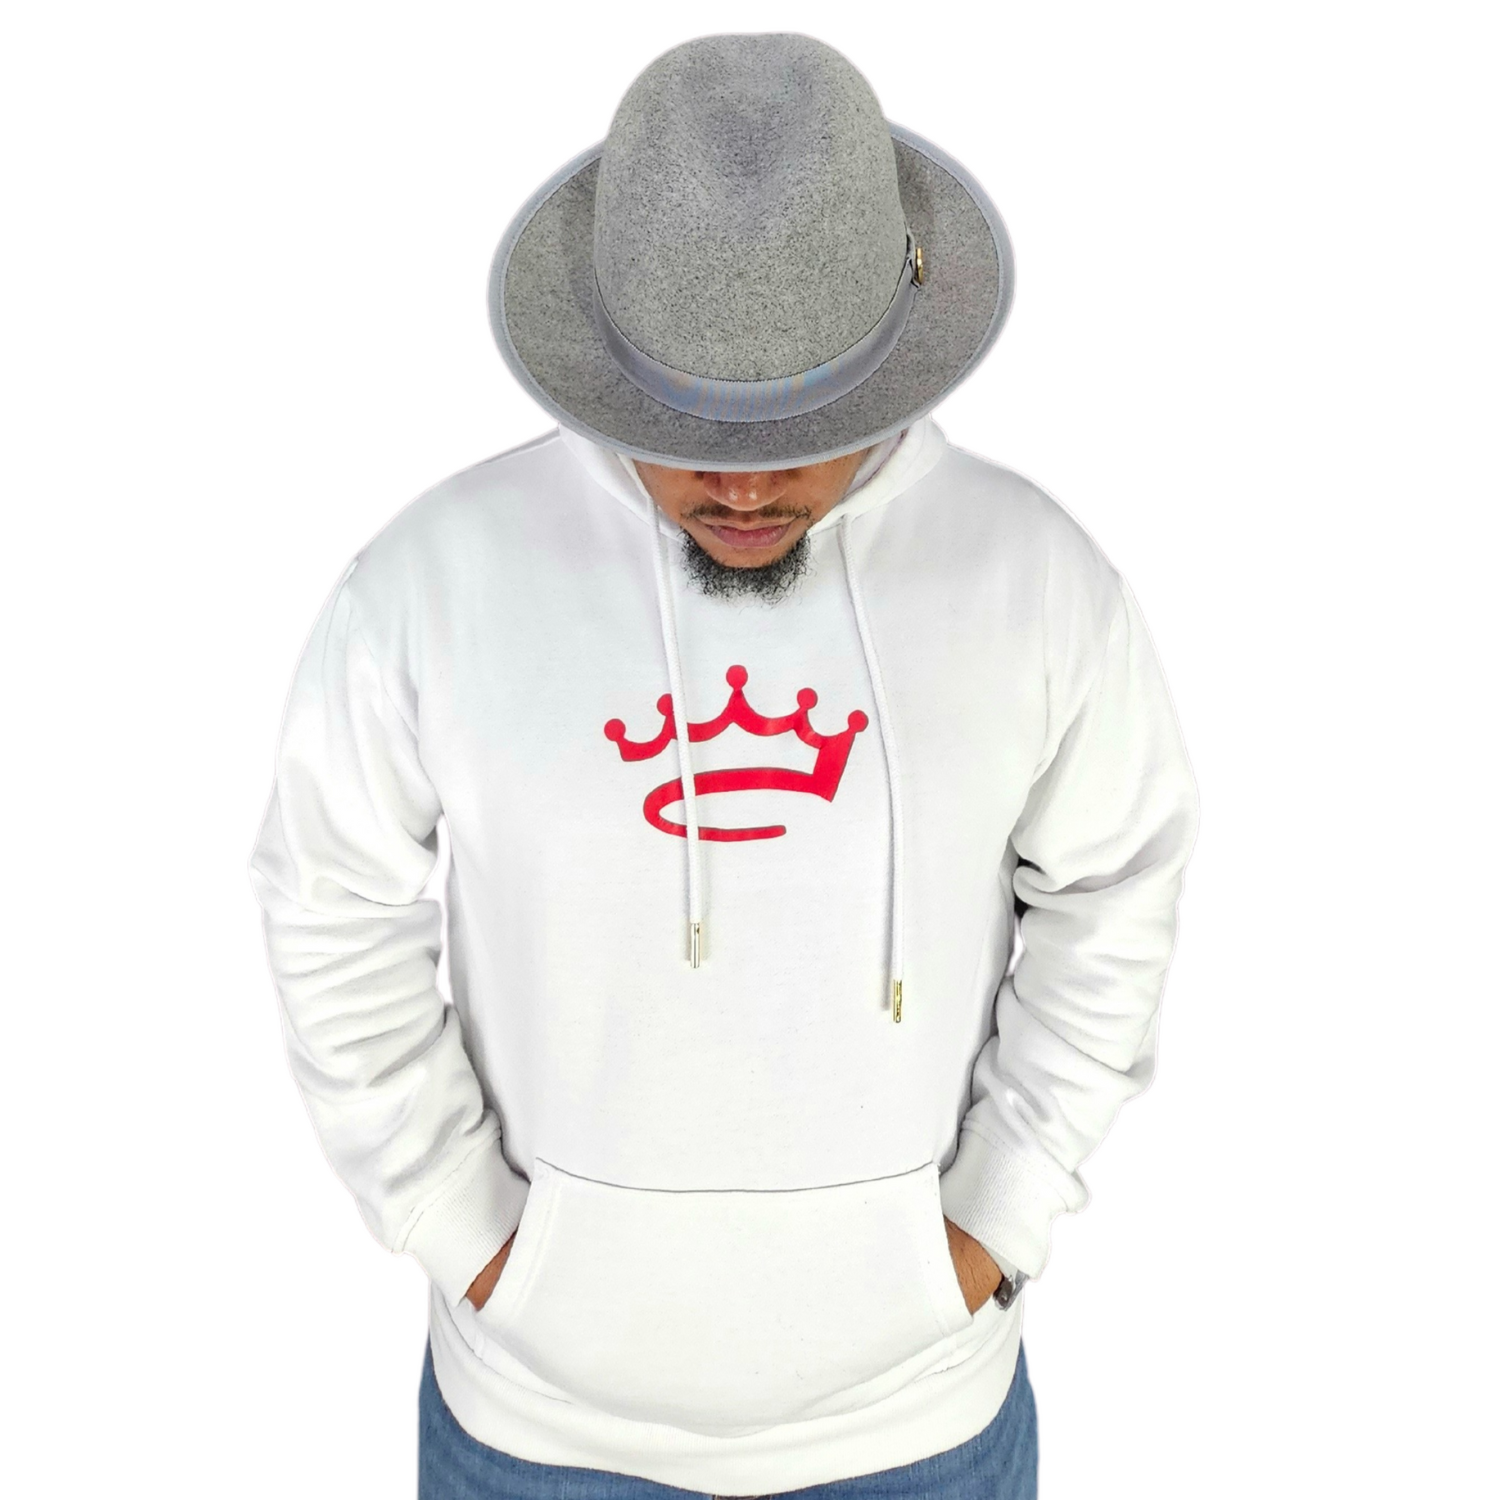 mens hoodie white red crowned brand logo